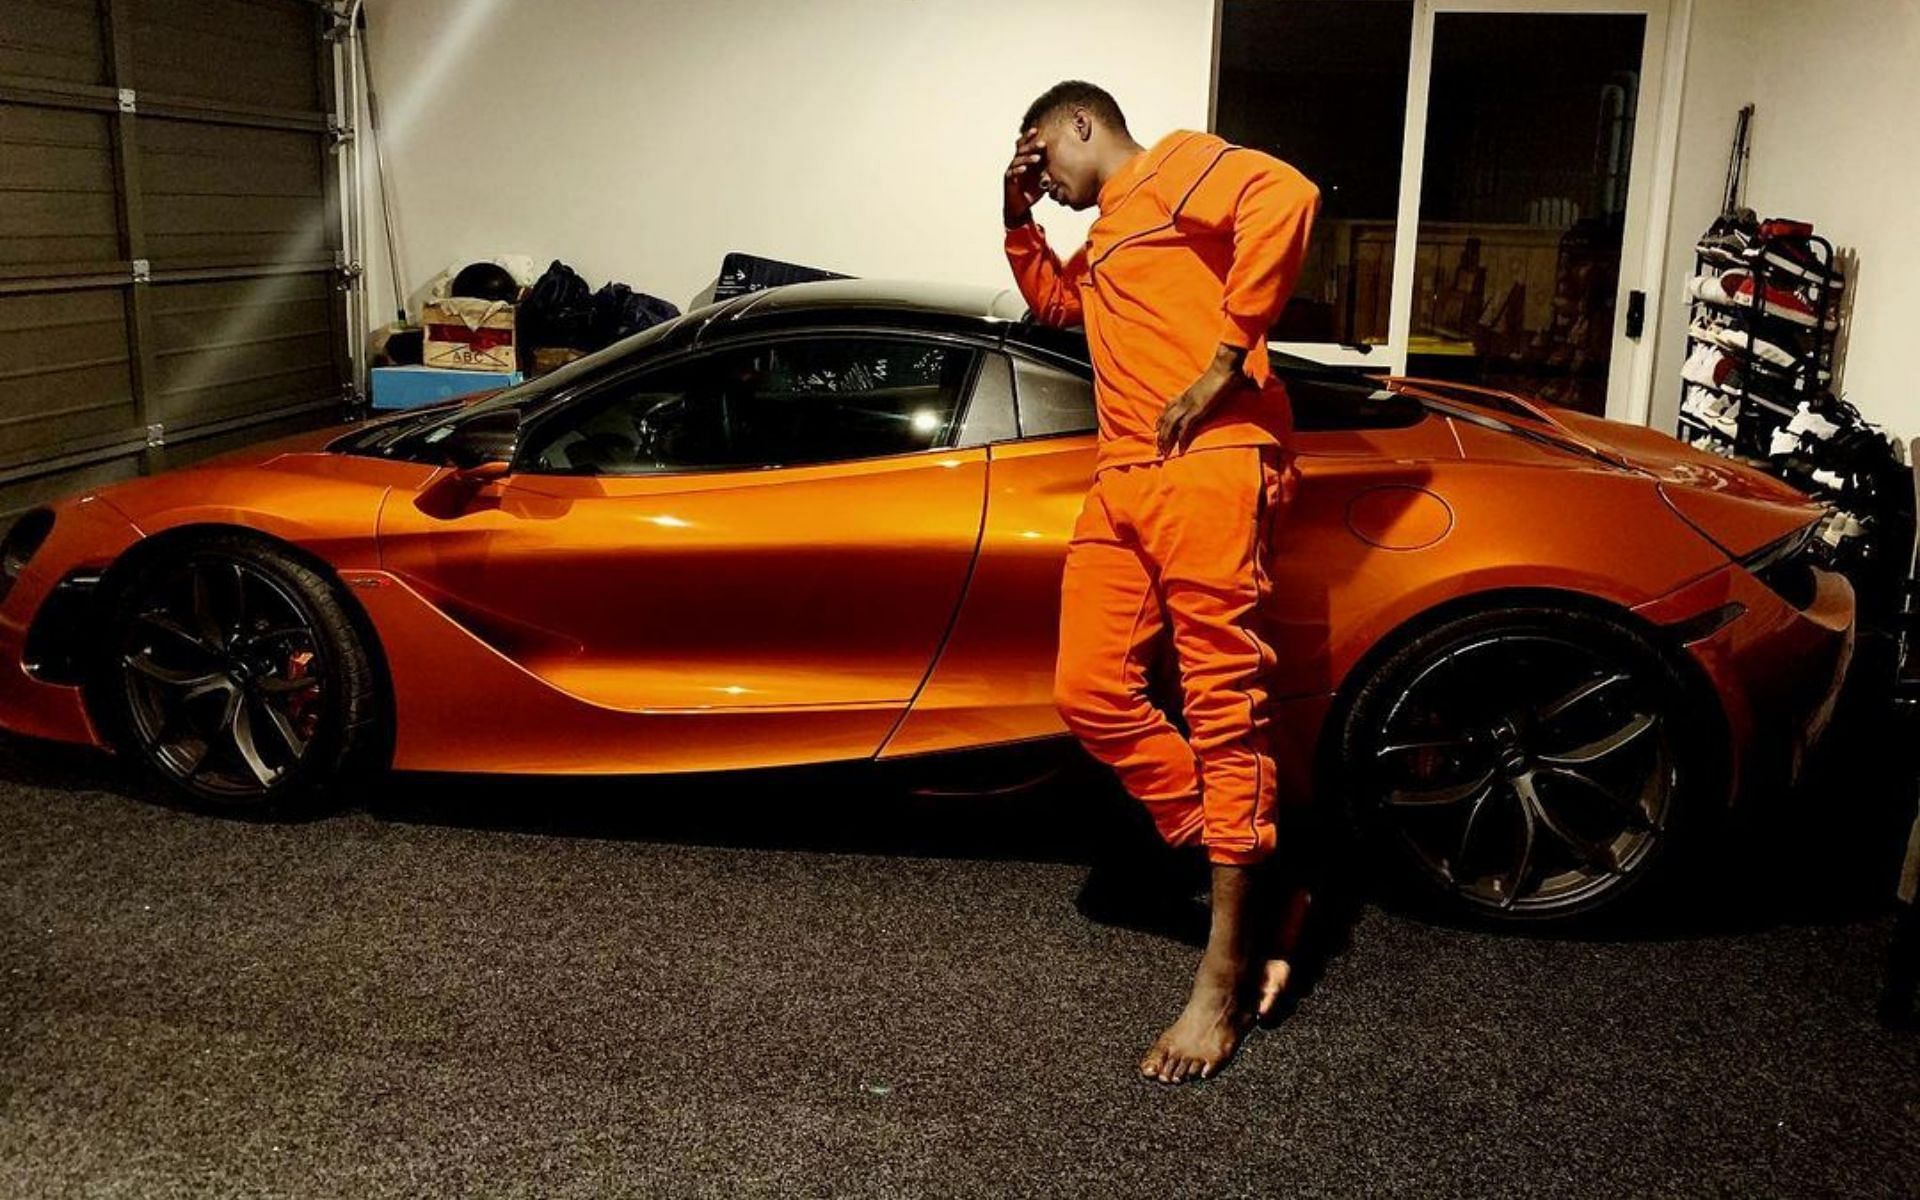 Israel Adesanya posing with his McLaren 720s Spider [Image credits: @stylebender on Instagram]